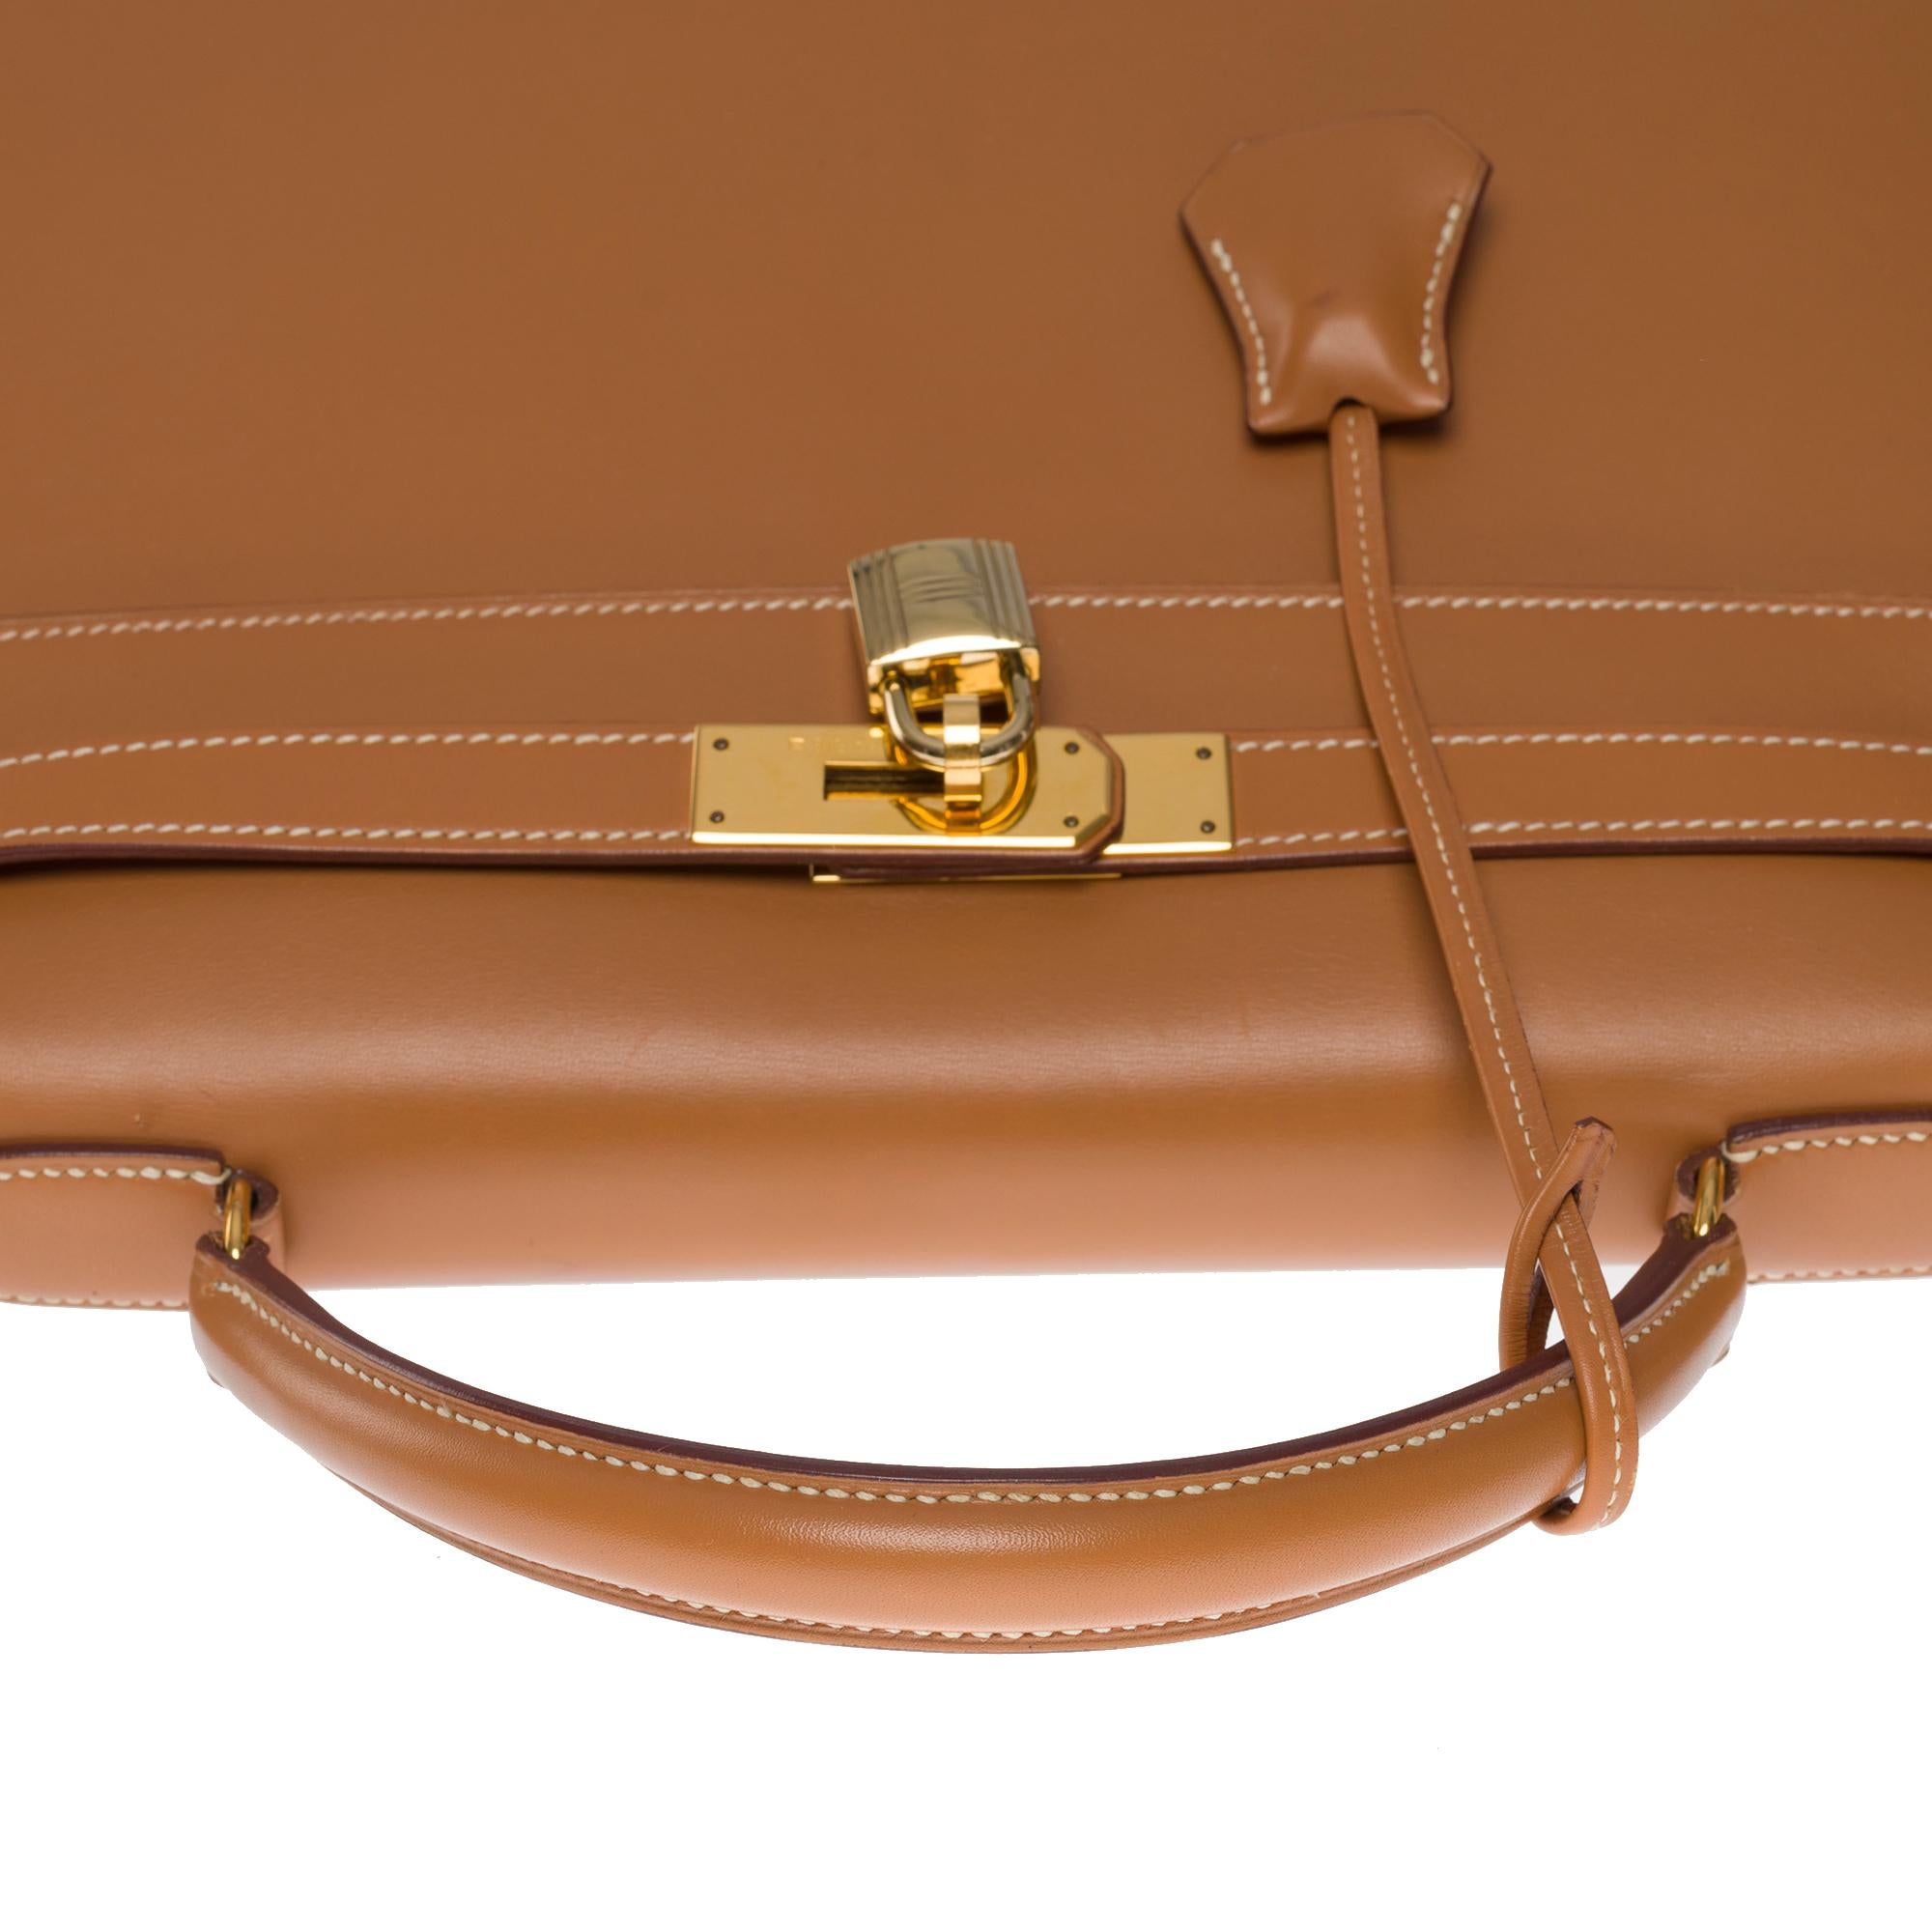 Very Rare Hermès Kelly 32 sellier handbag strap in Gold Chamonix leather , GHW 5